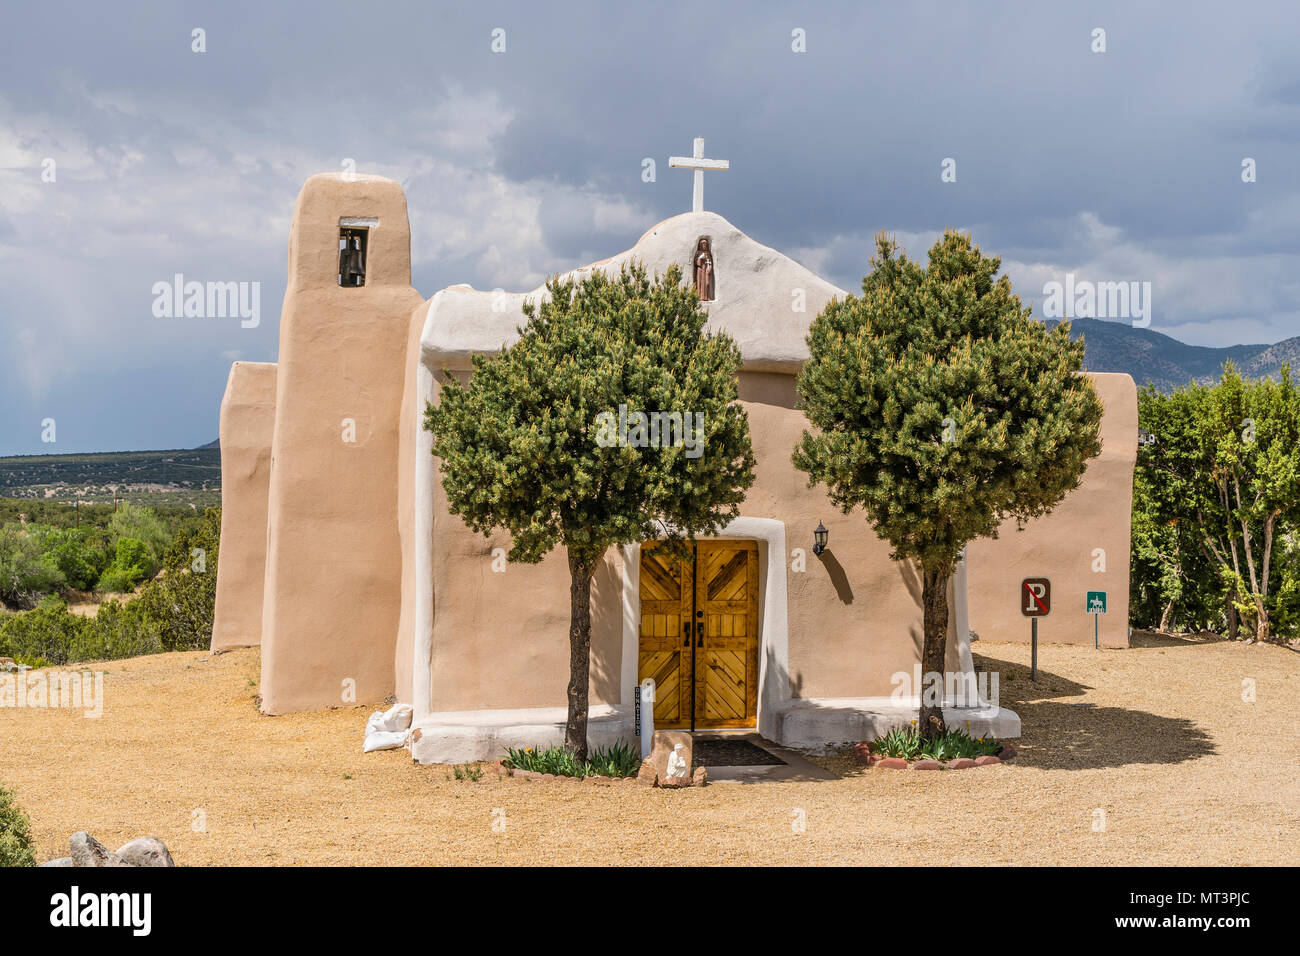 San Francisco de Asis Catholic Church in Golden, New Mexico. It was established in 1839. The church celebrates Fiesta de San Francisco de Assis. Stock Photo